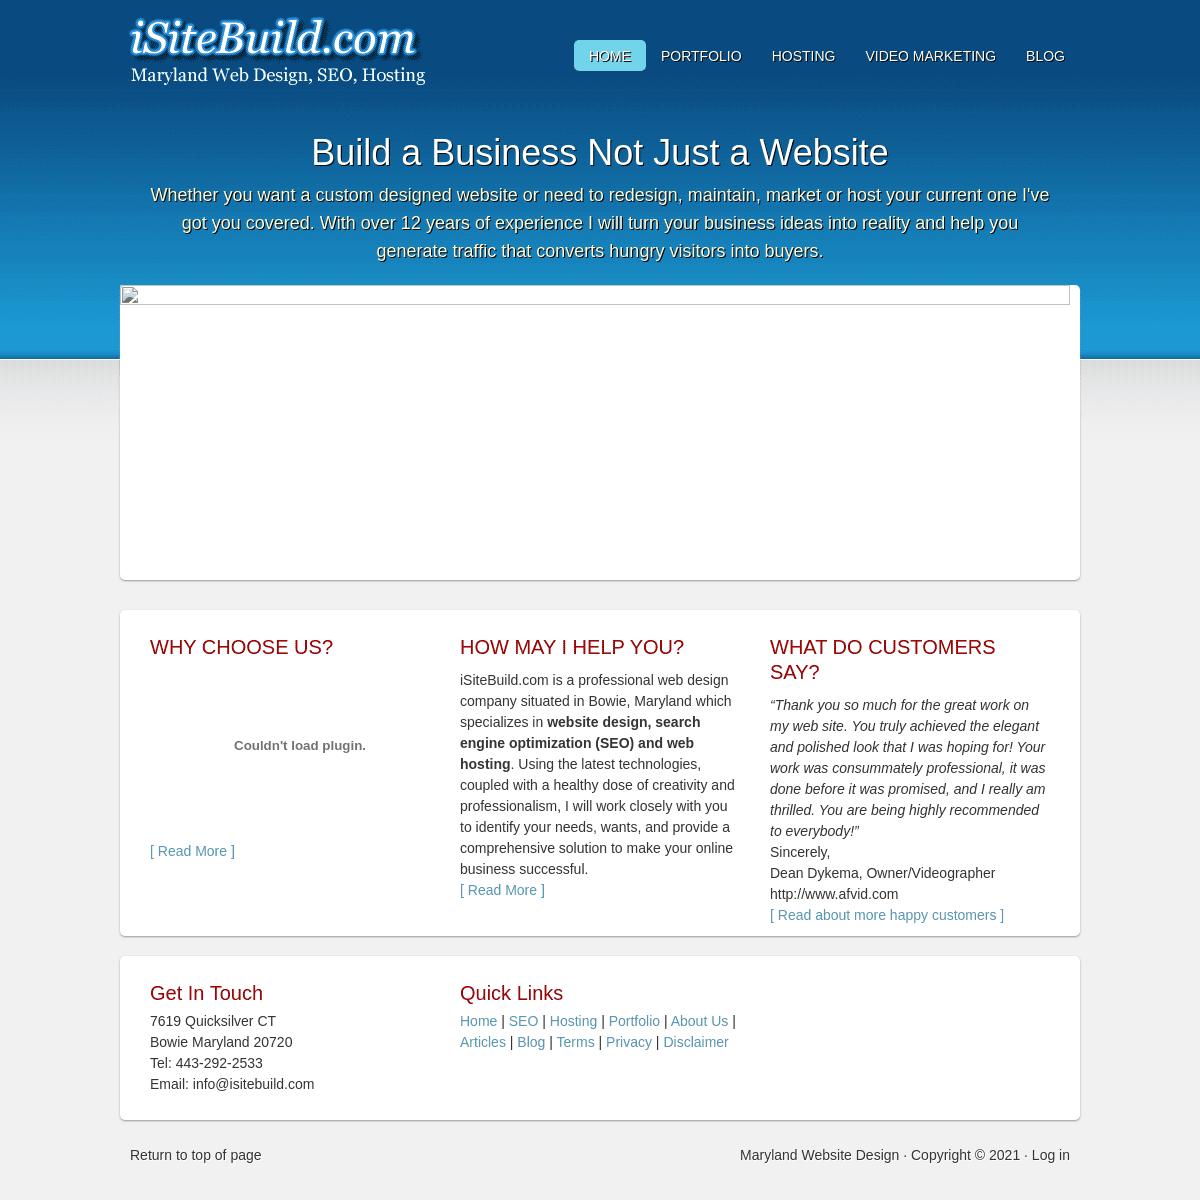 A complete backup of https://isitebuild.com